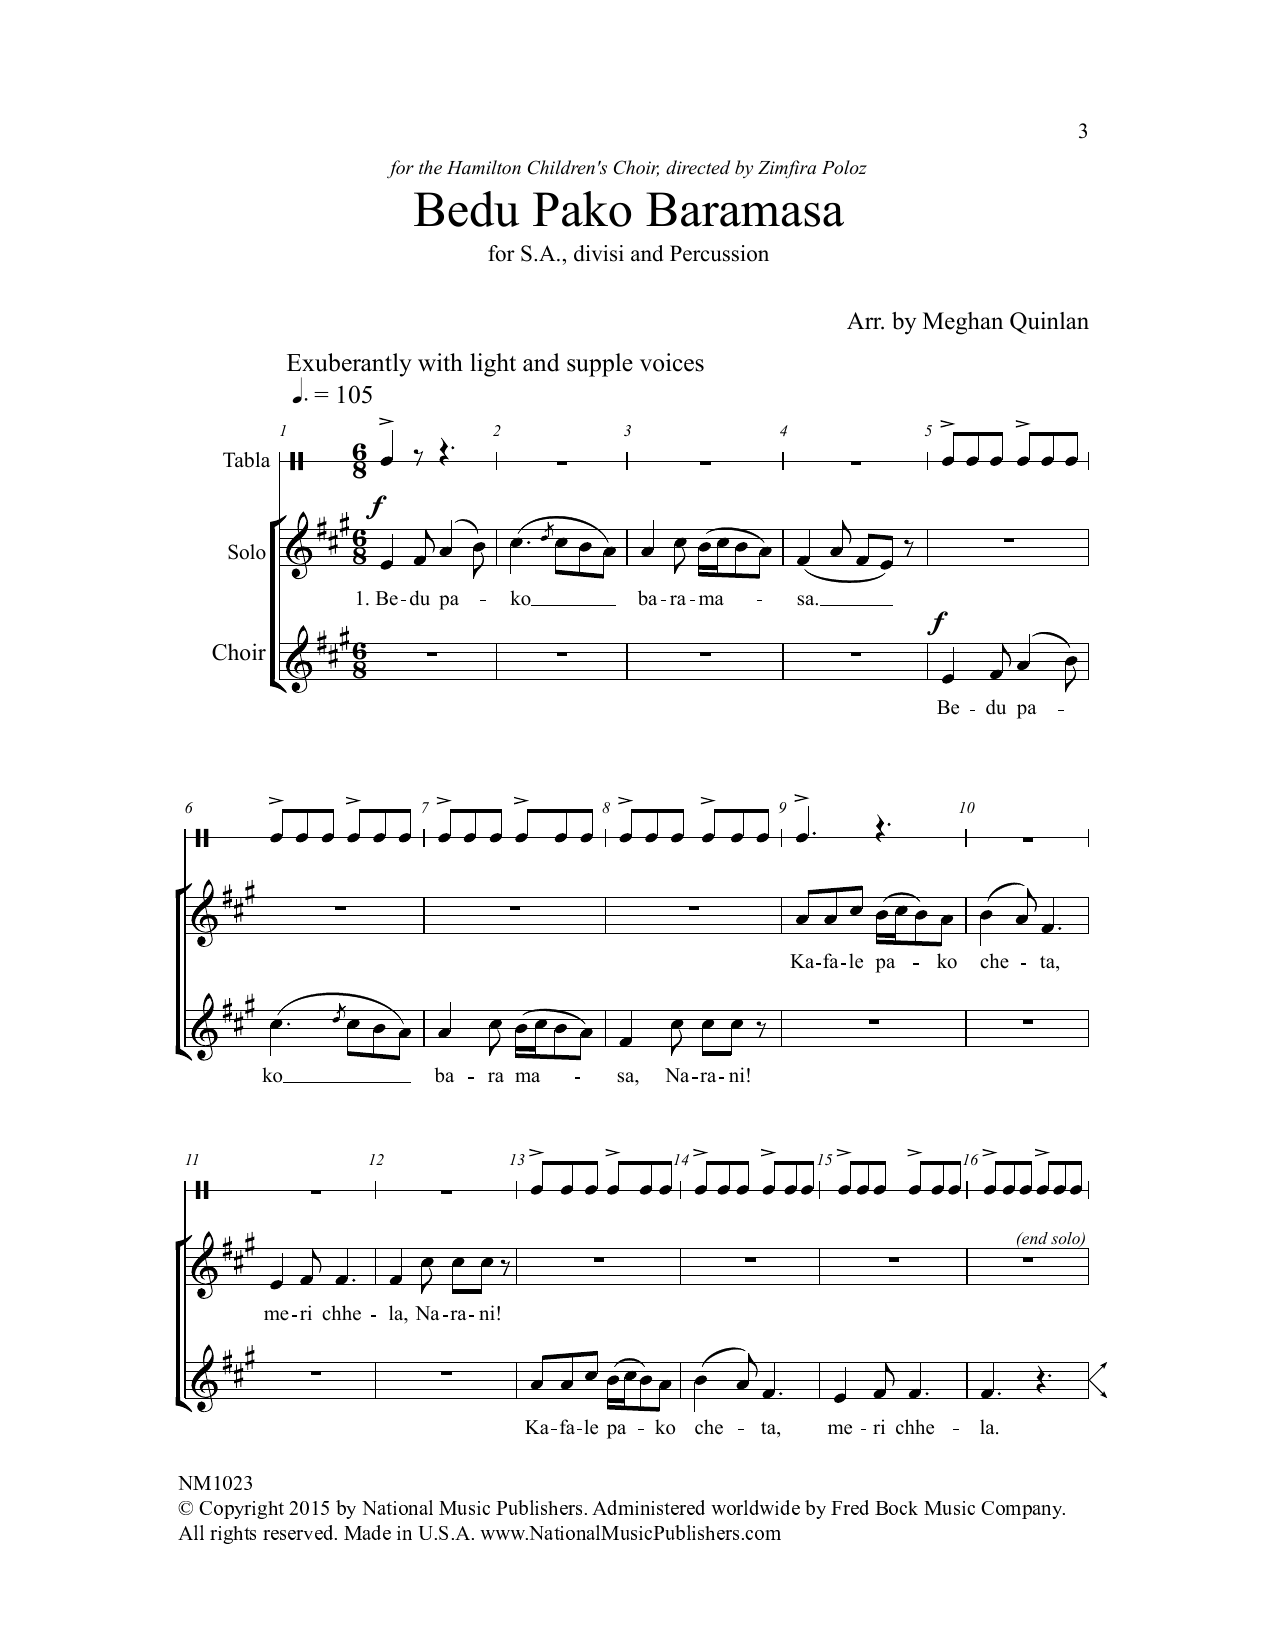 Meghan Quinlan Bedu Pako Baramasa Sheet Music Notes & Chords for Choral - Download or Print PDF